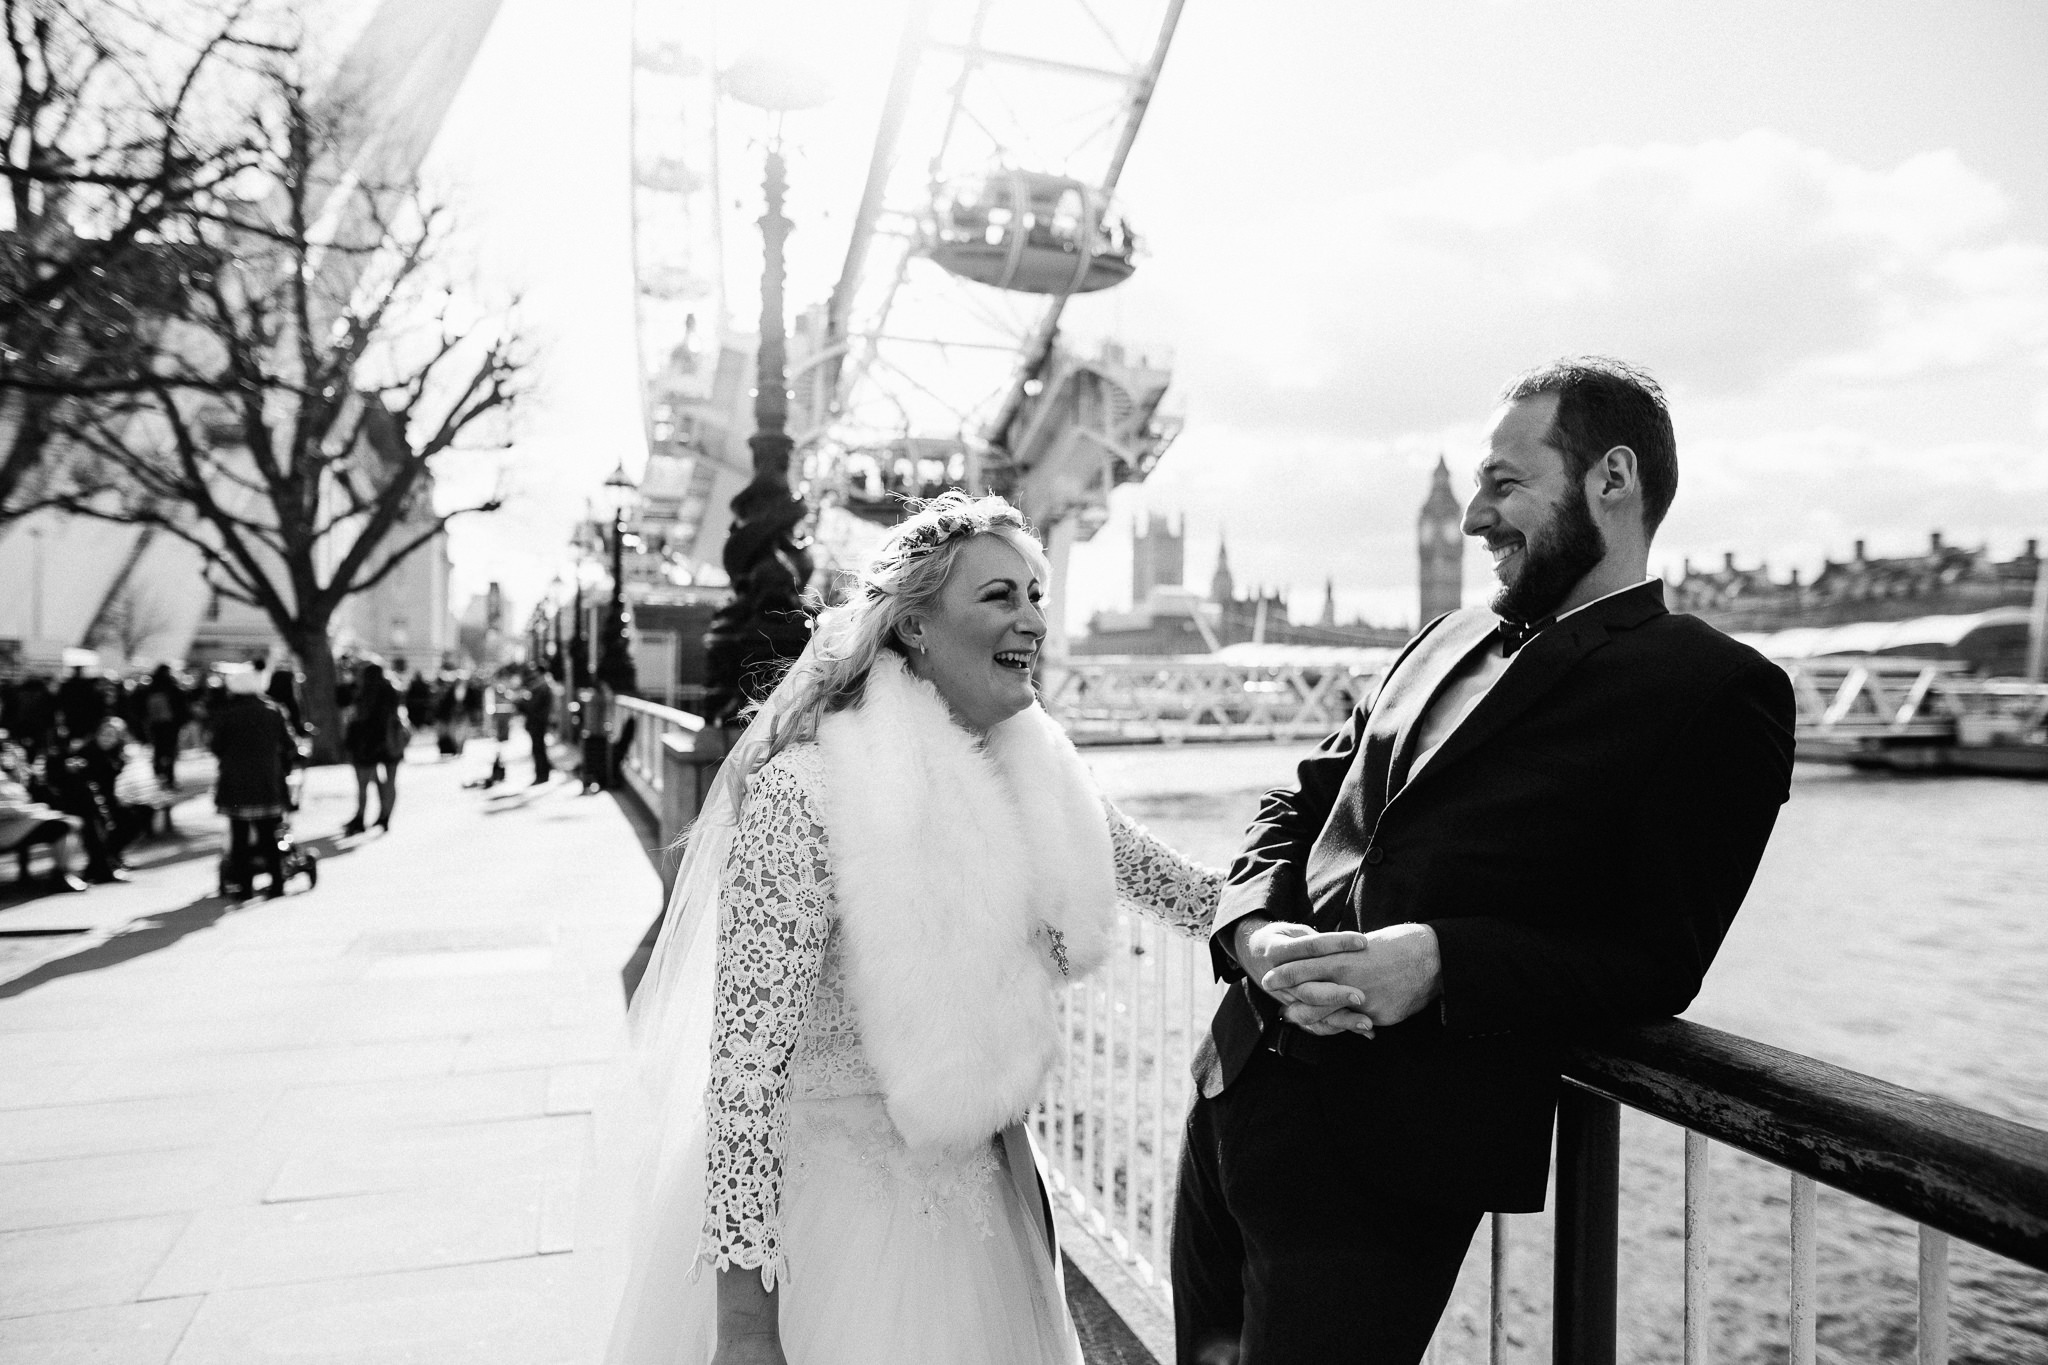 elopement photographer inside london eye ceremony